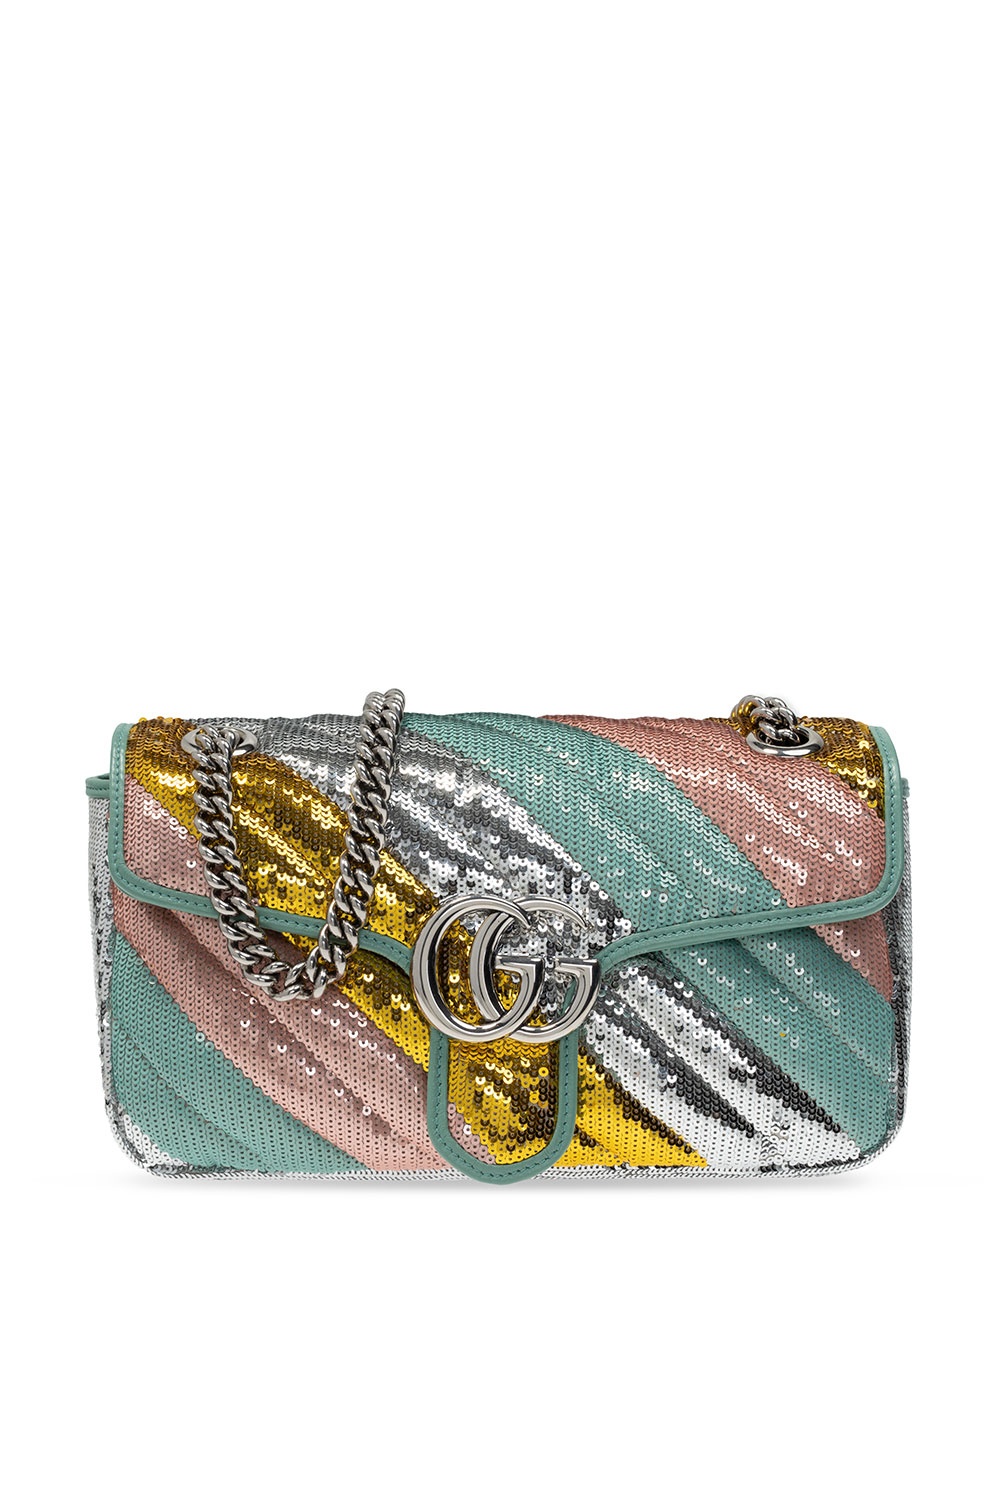 WOMEN FASHION Bags Print Multicolored Single Luna Llena Handbag discount 58% 